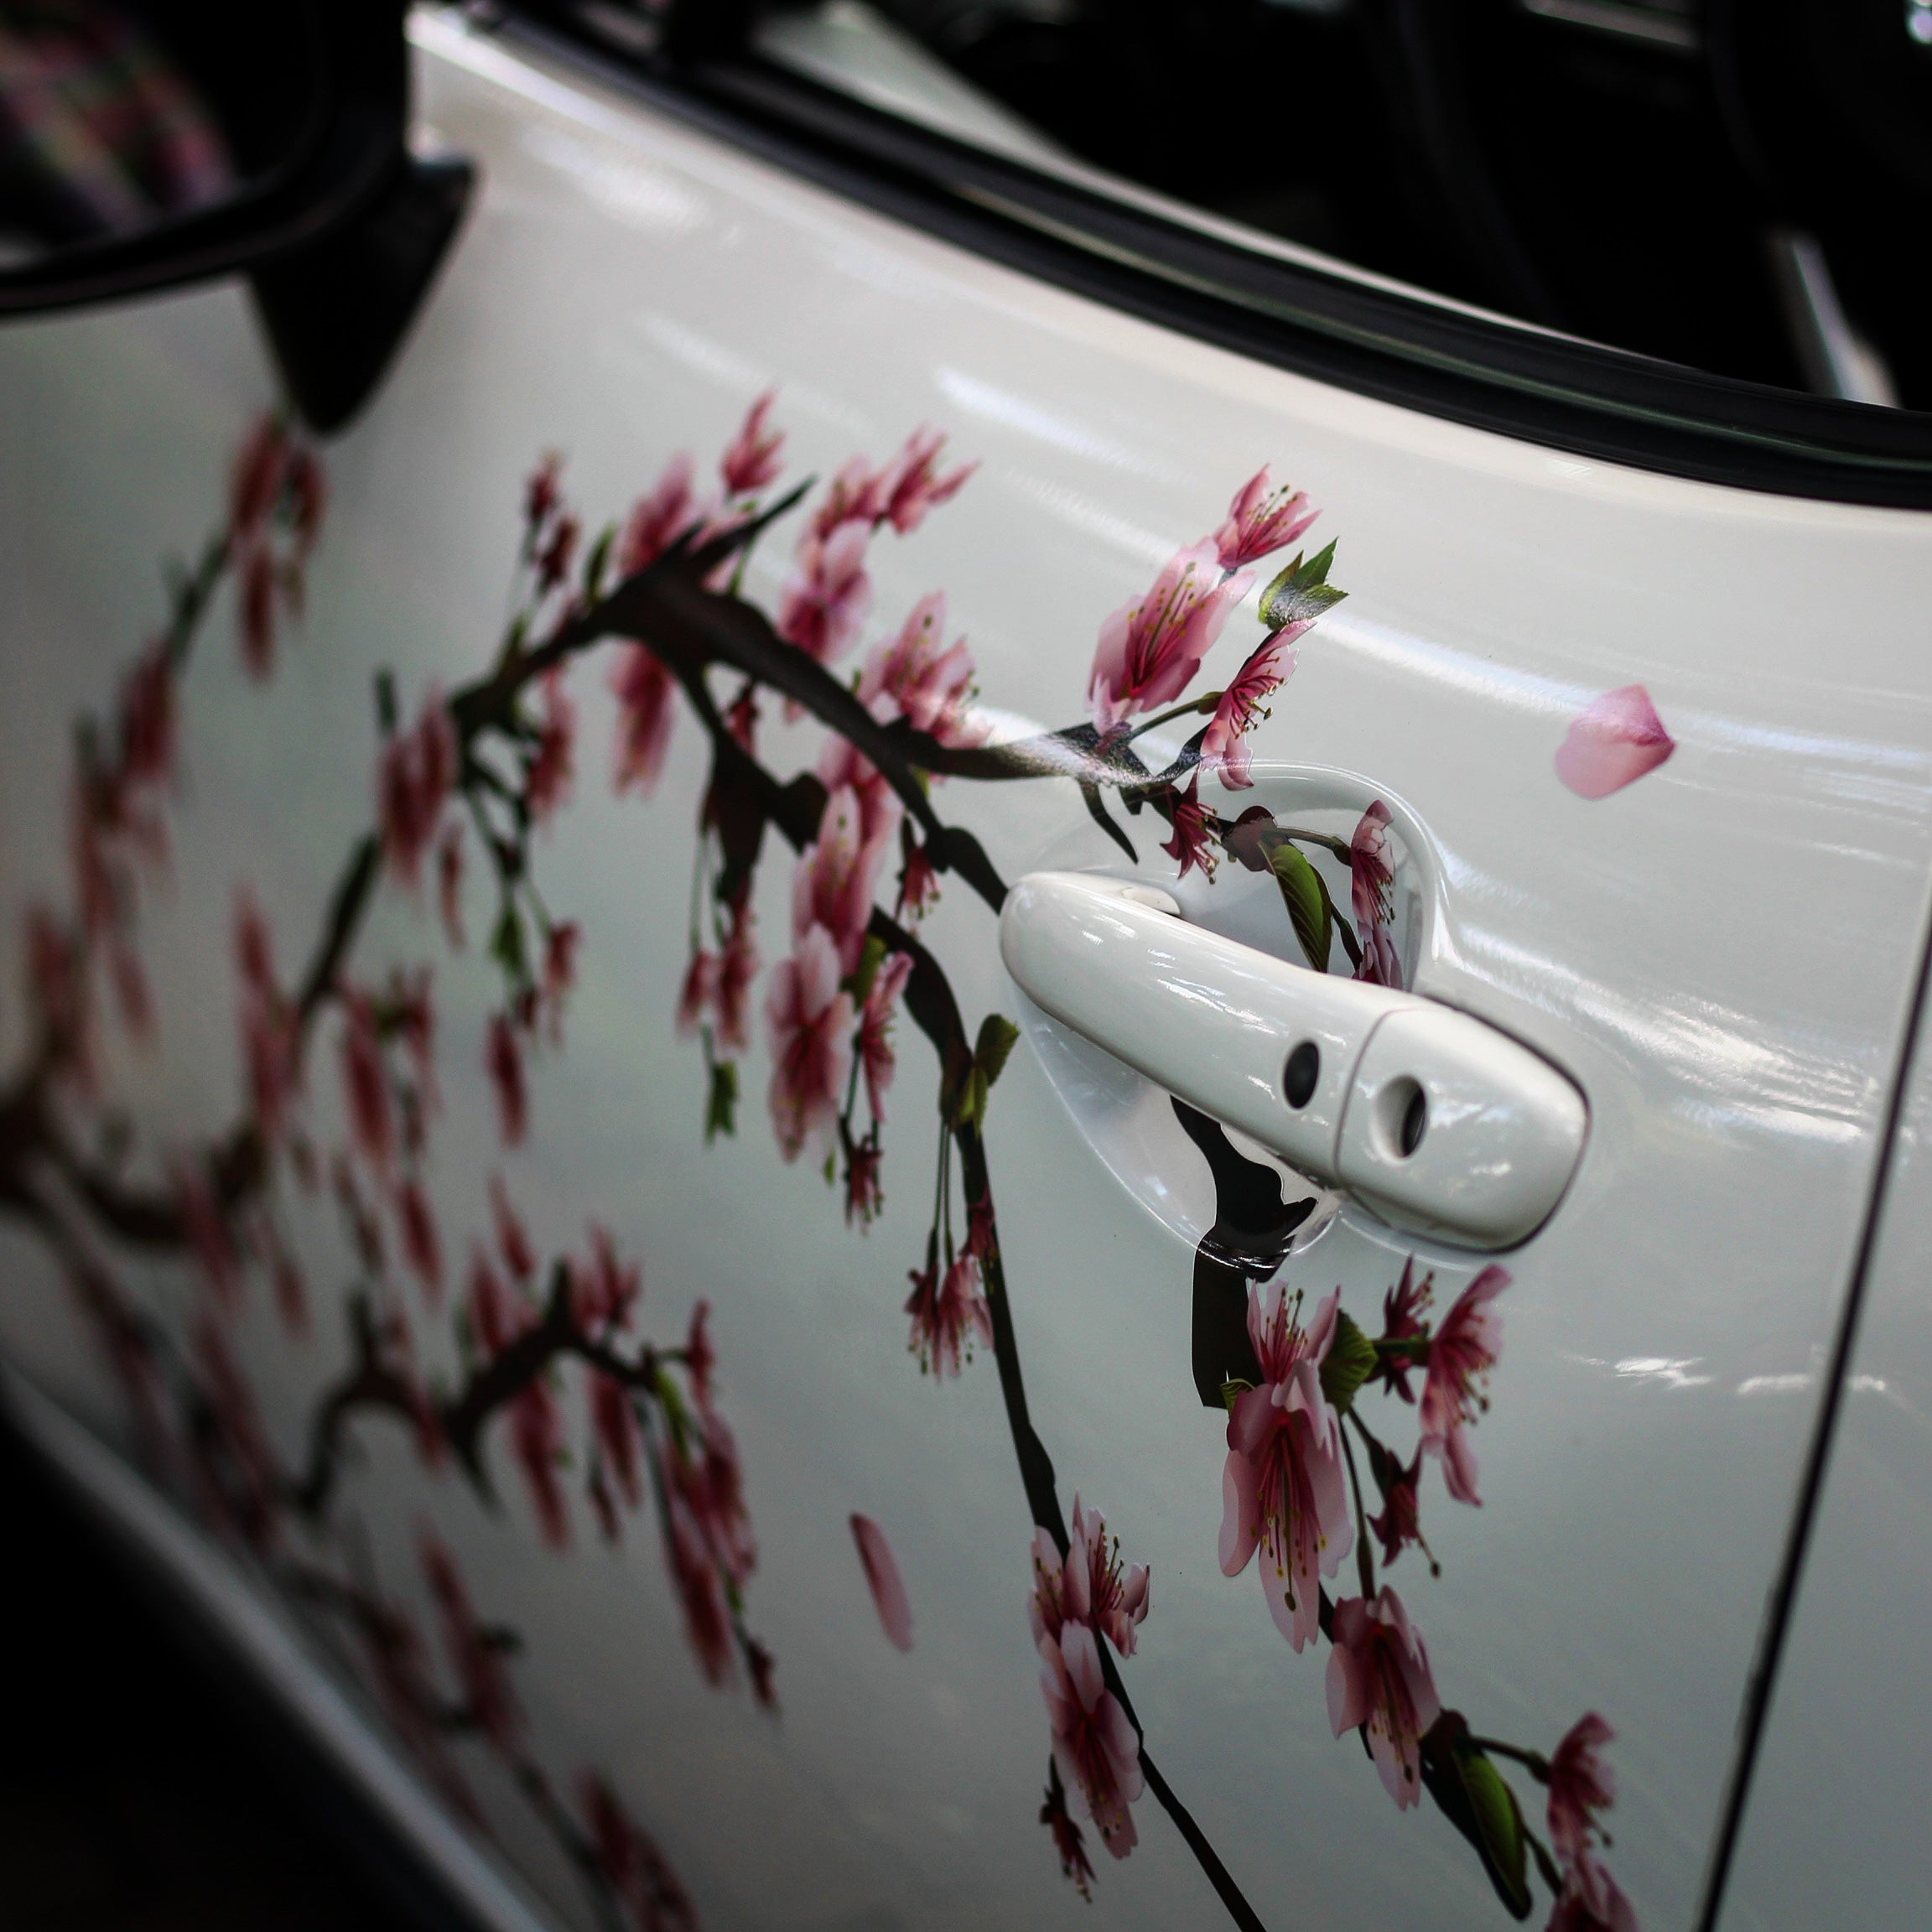 Sakura Cherry Blossom Livery, Japanese Theme Side Car Vinyl Wrap, Universal  Size, Large Vehicle Graphics